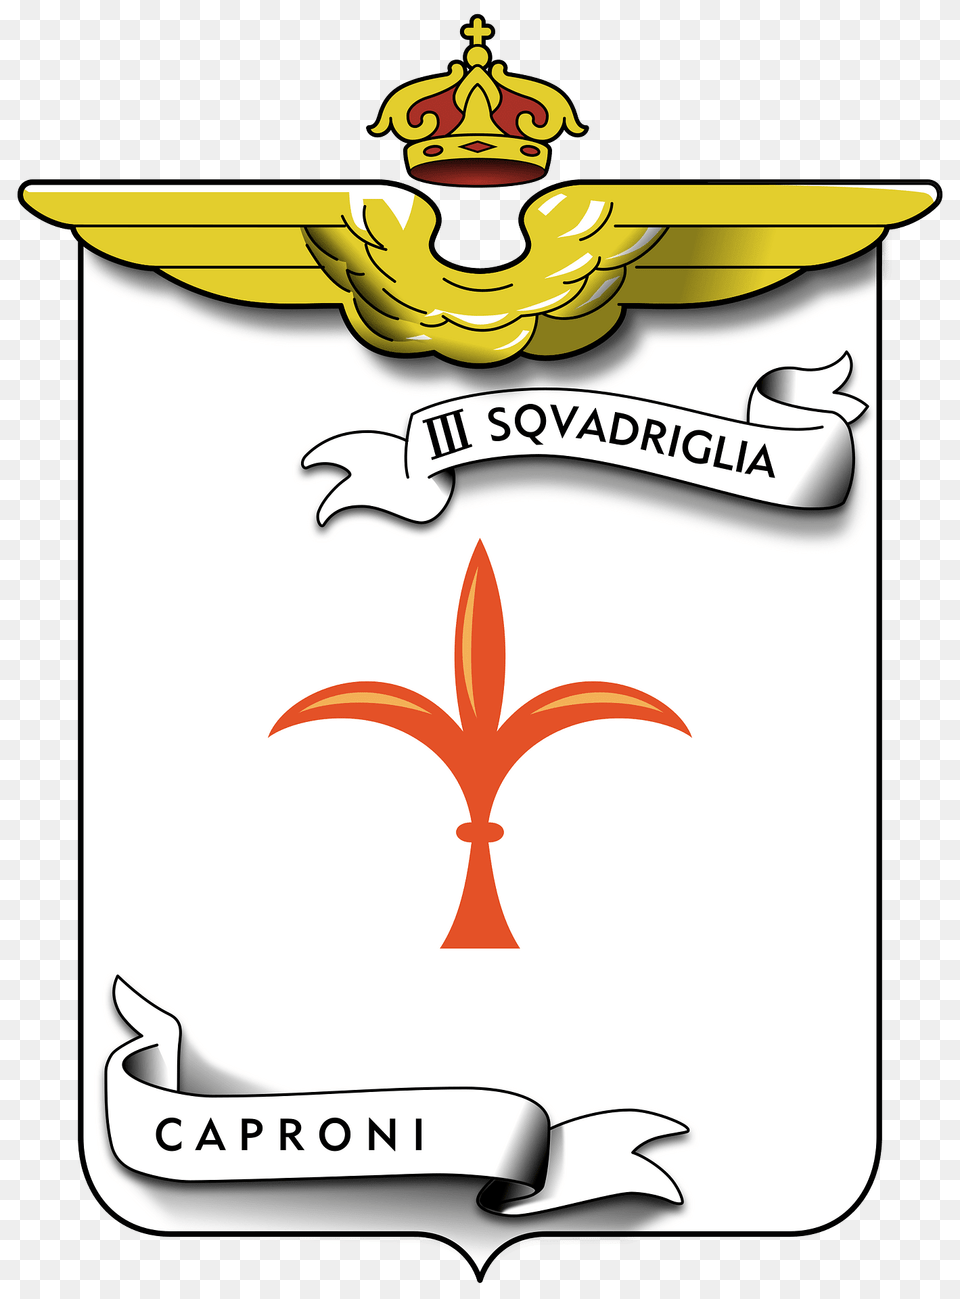 Coa Iii Squadriglia Caproni Clipart, Logo, Emblem, Symbol, Smoke Pipe Free Transparent Png